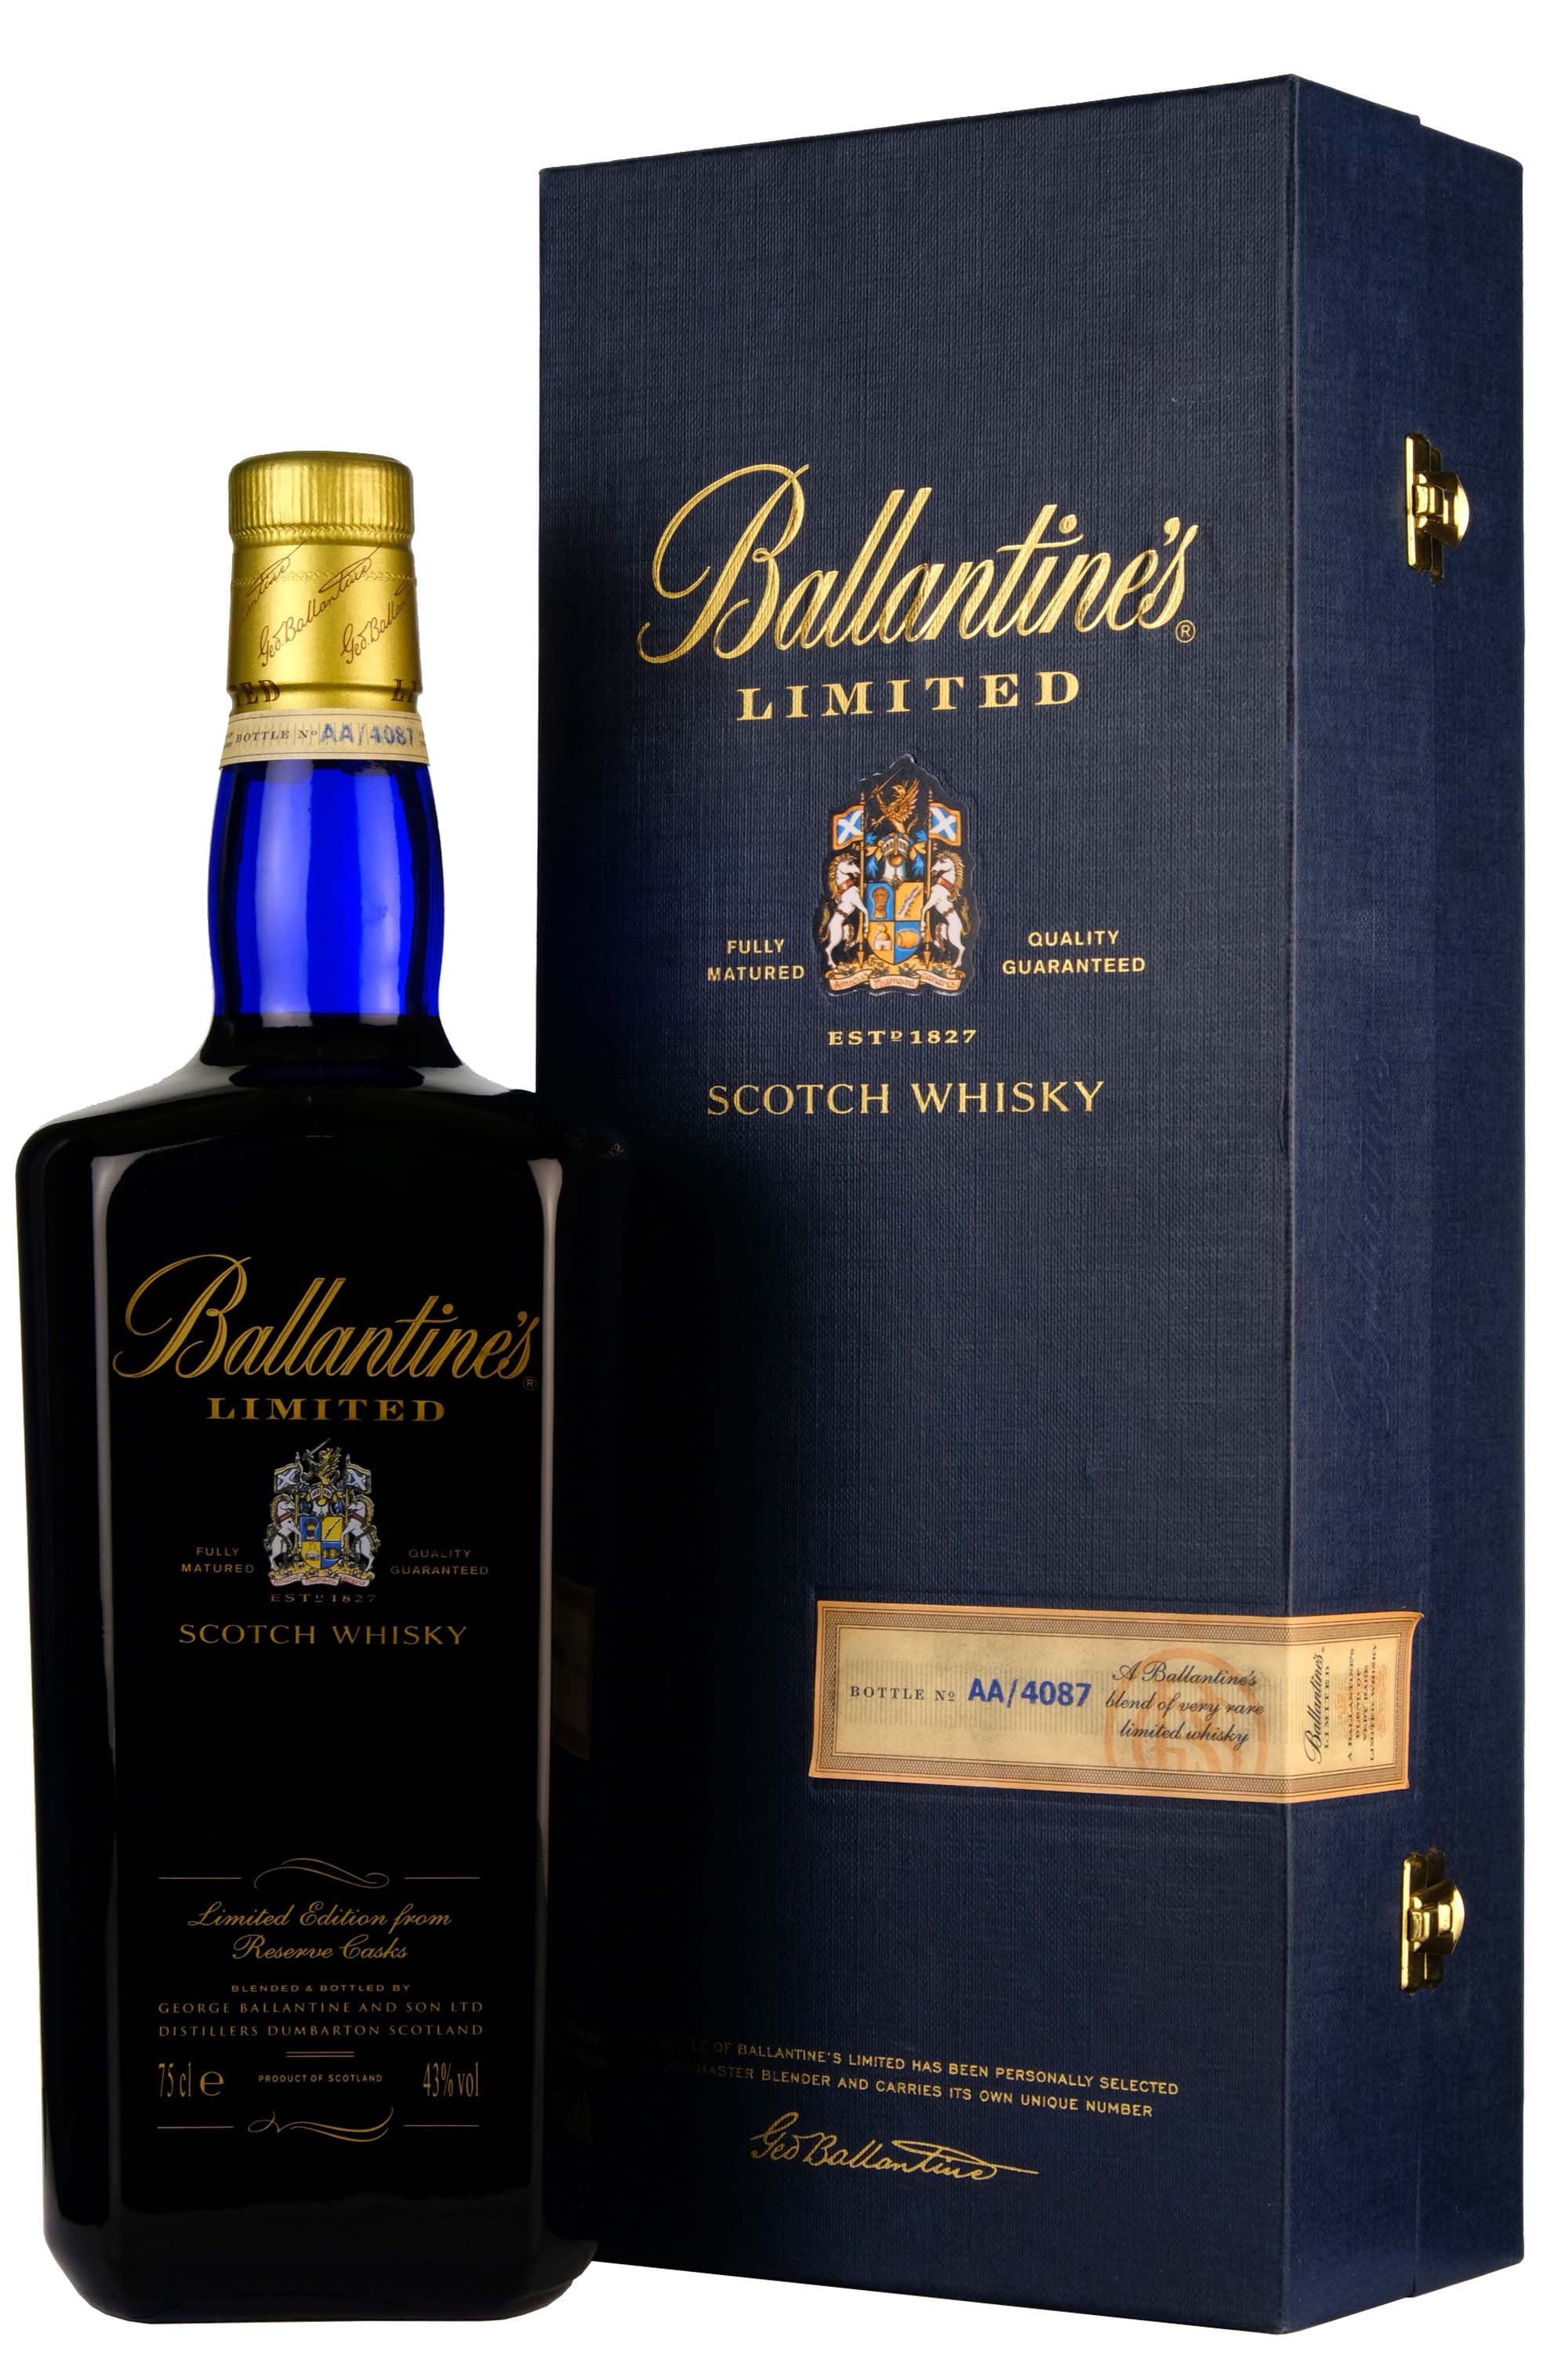 Whisky Ballantines Fws - Gerenoteca